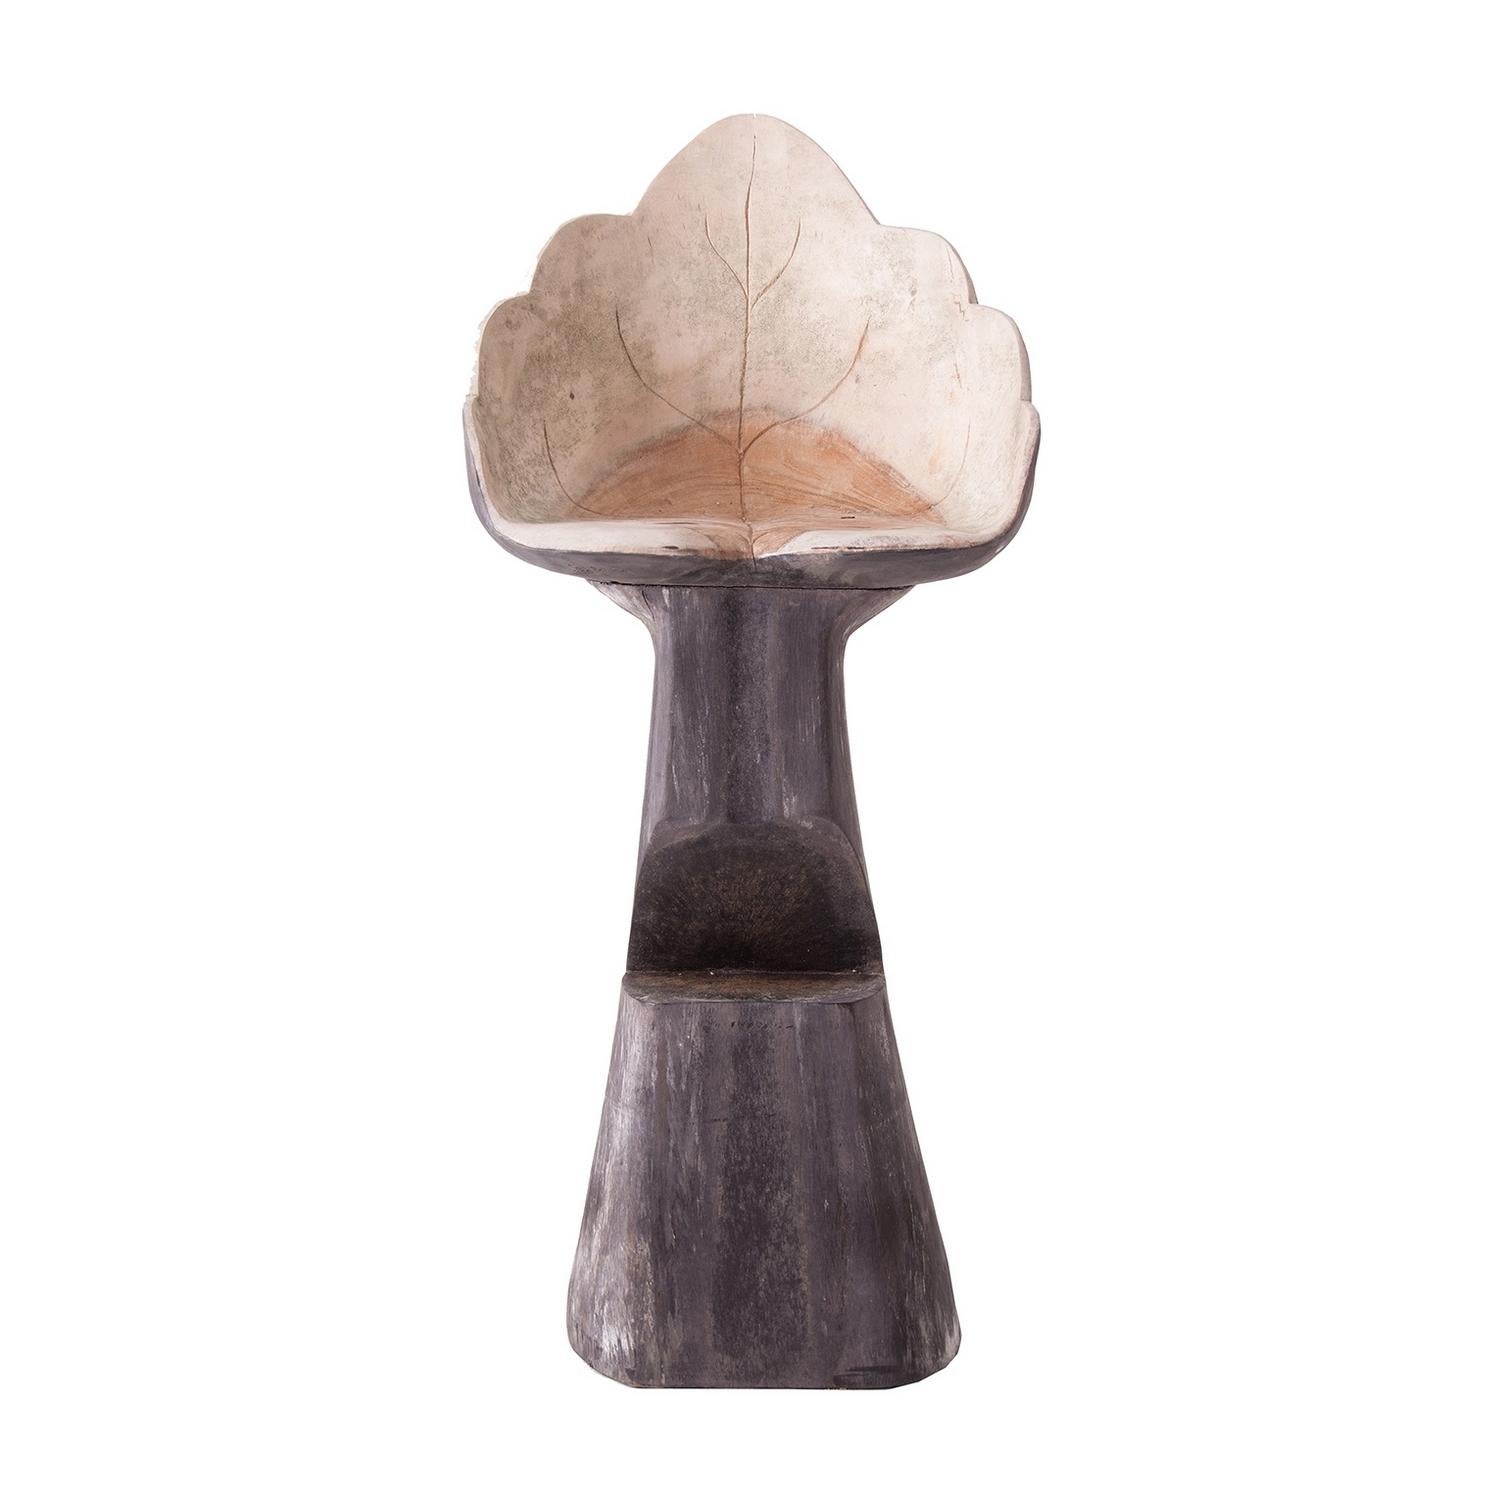 Organic style solid wood bar stool leaf shaped.